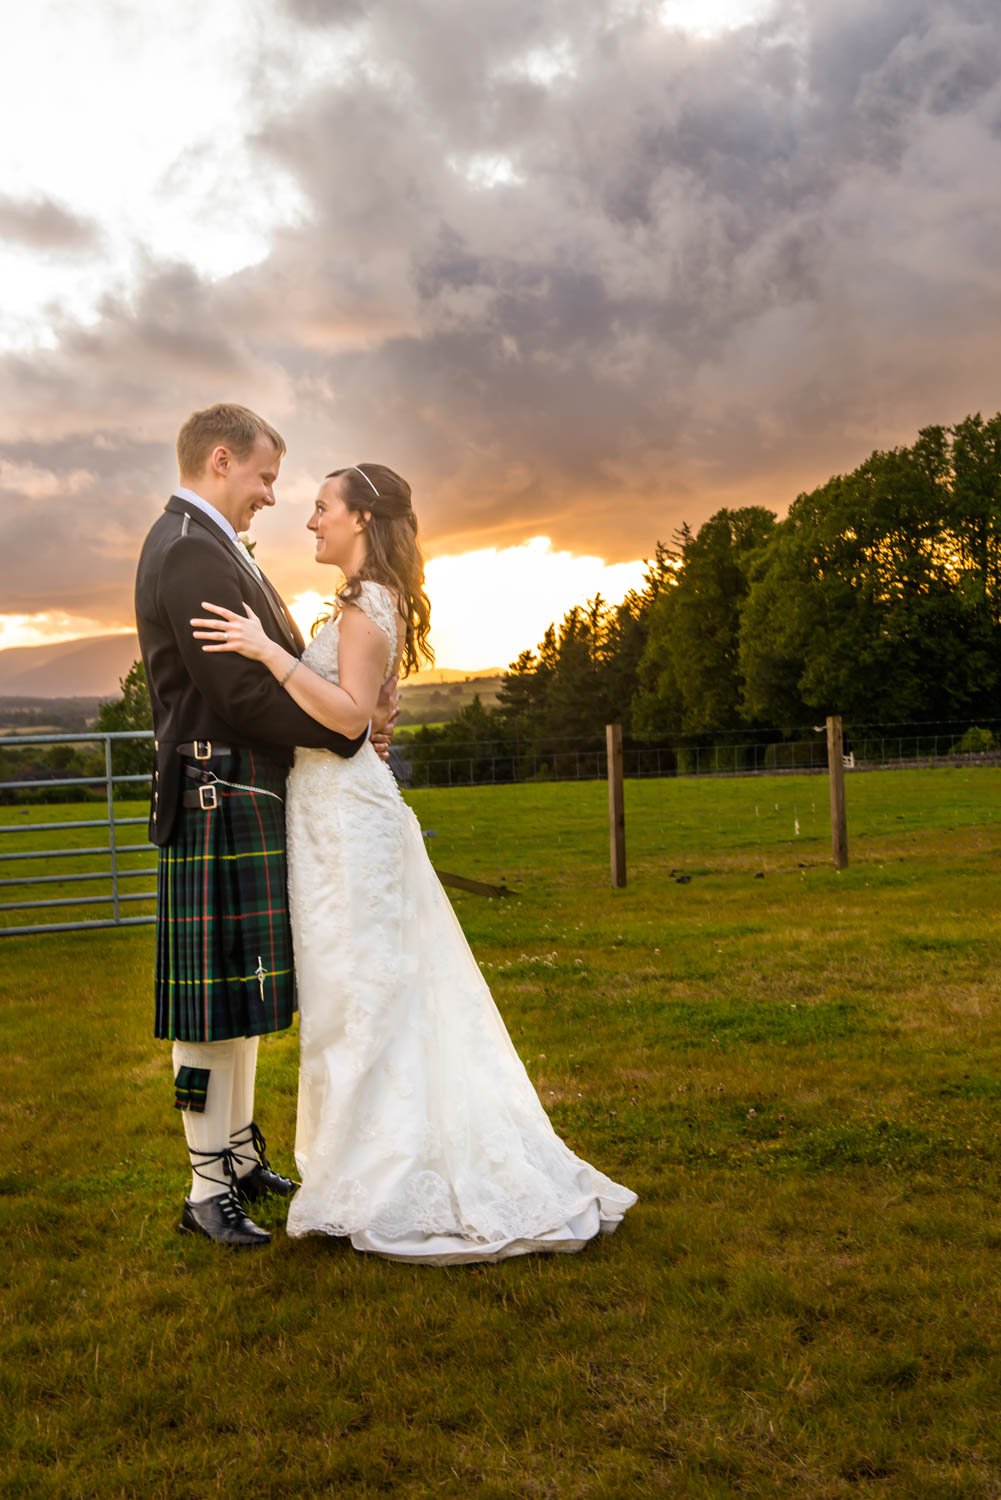 Wedding at Killearn Village Hall, Stirlingshire